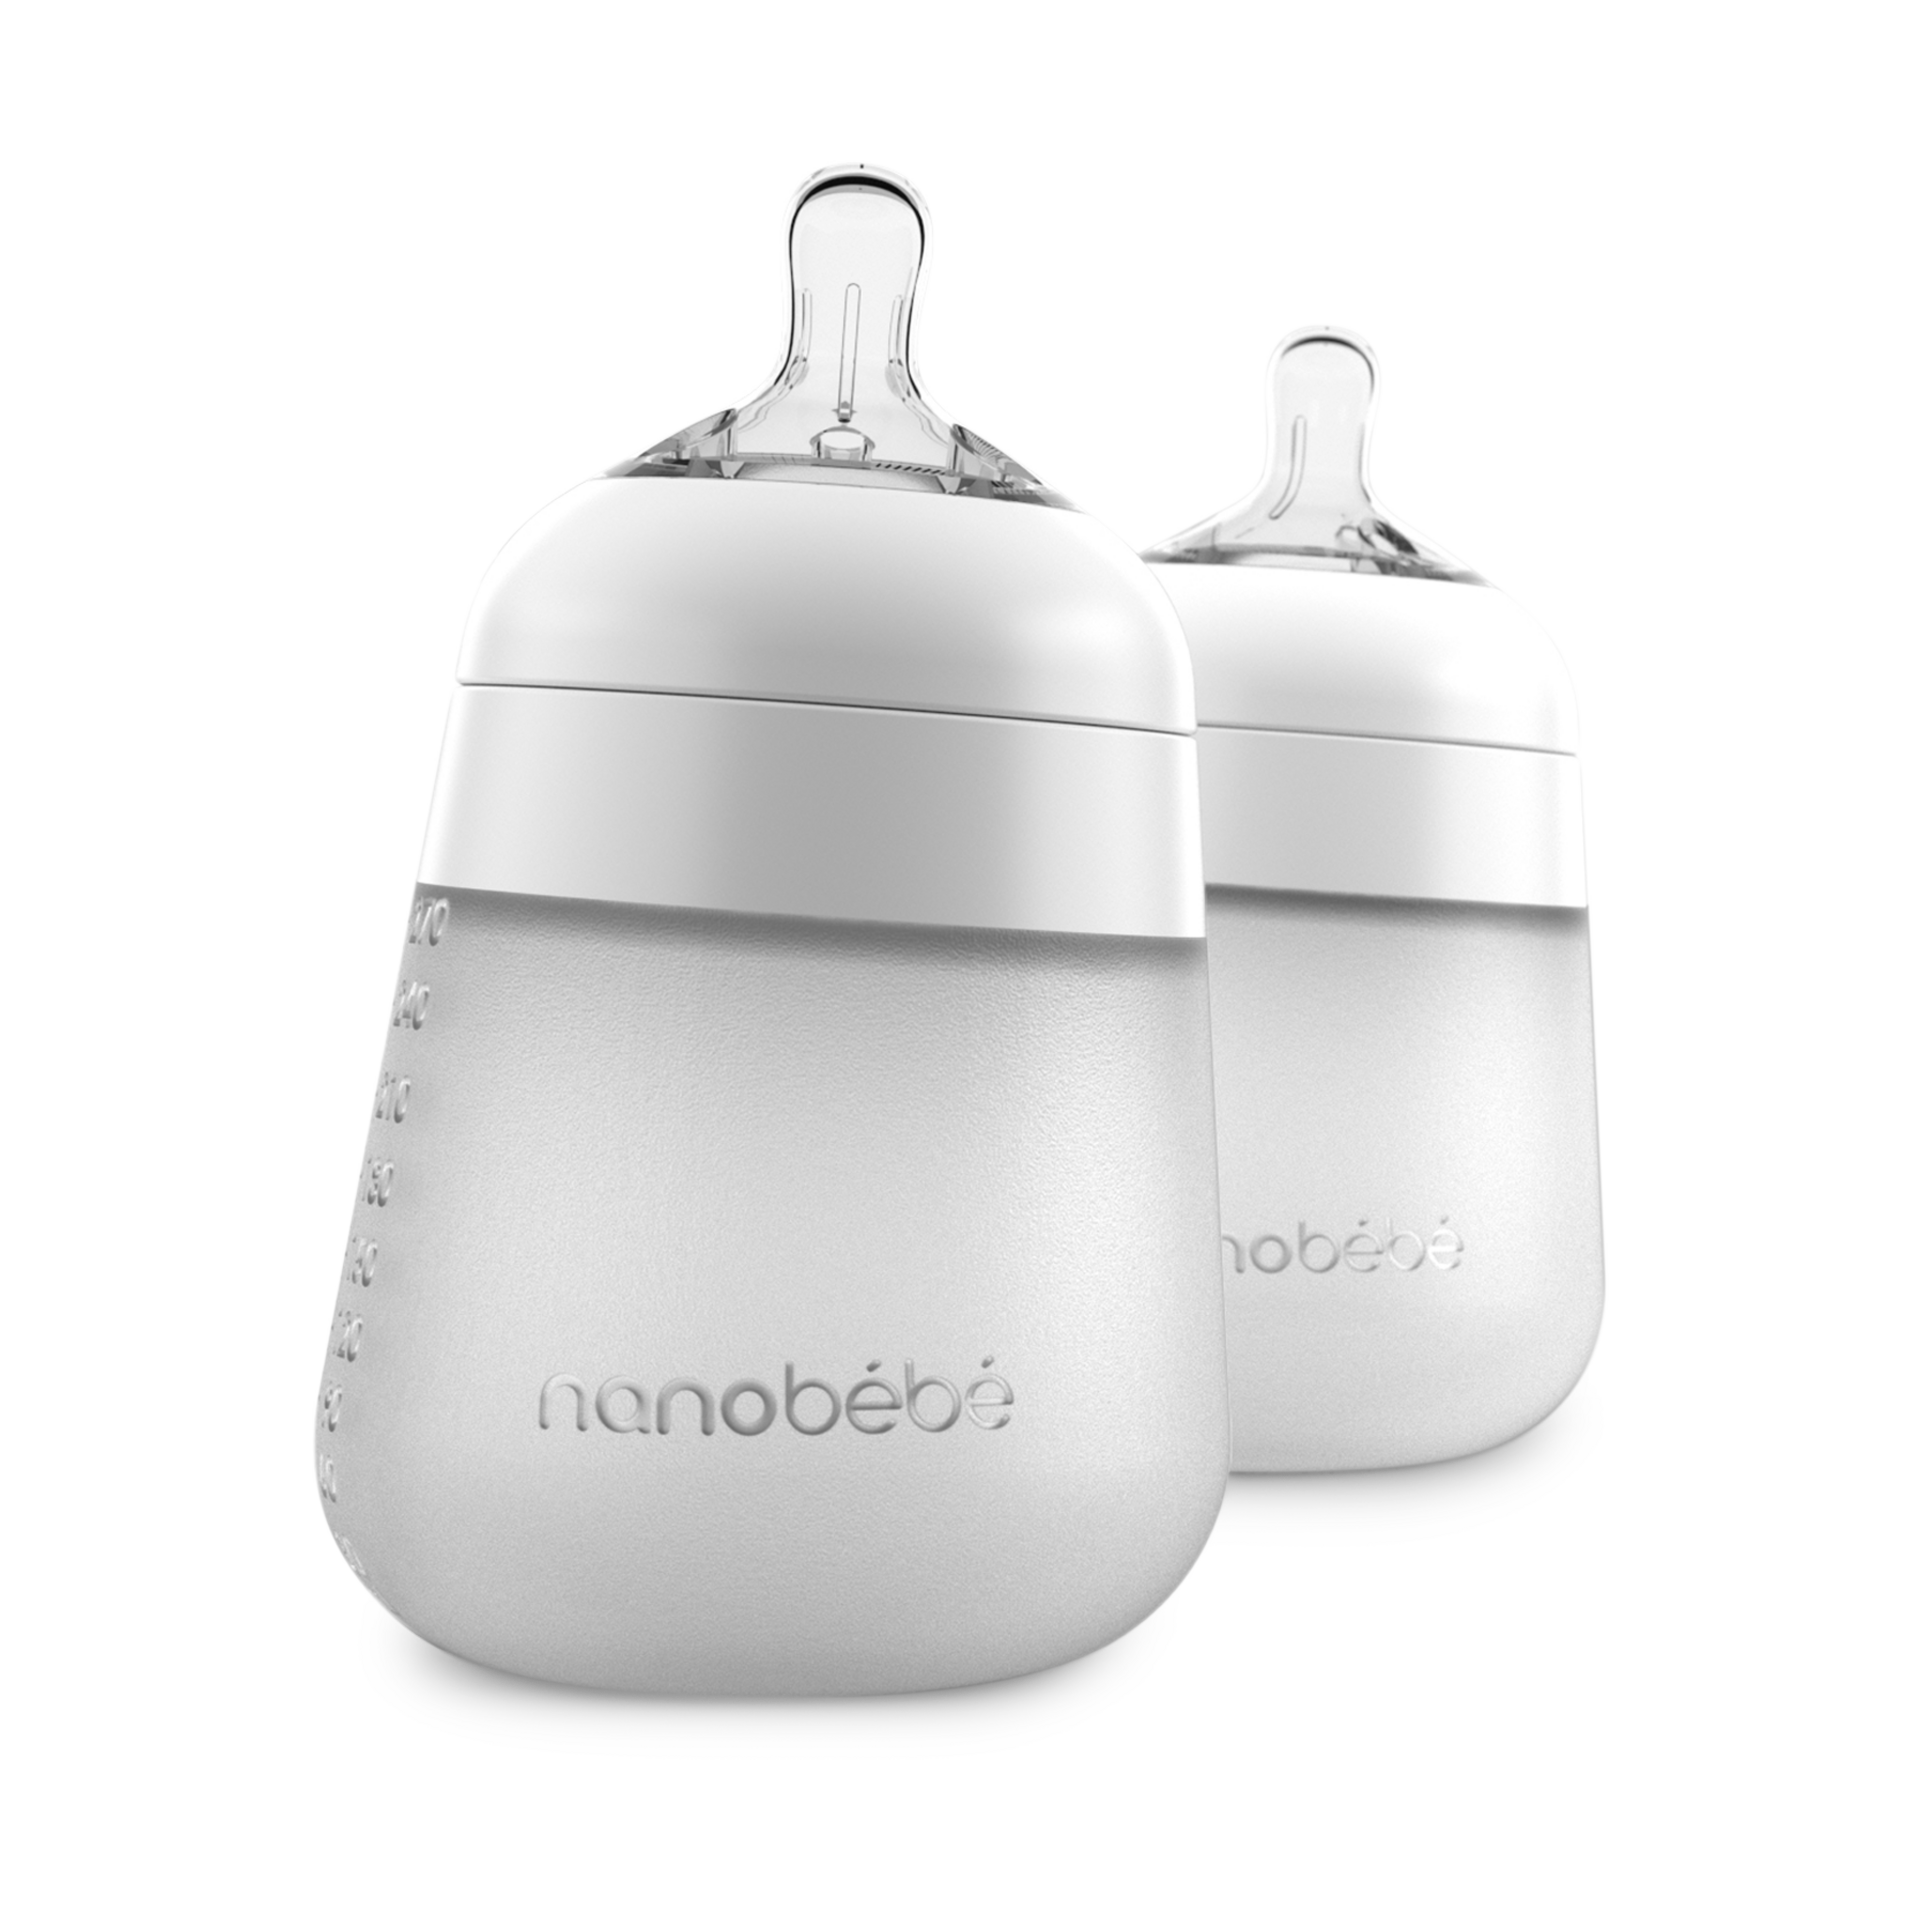 nanobebe bottles